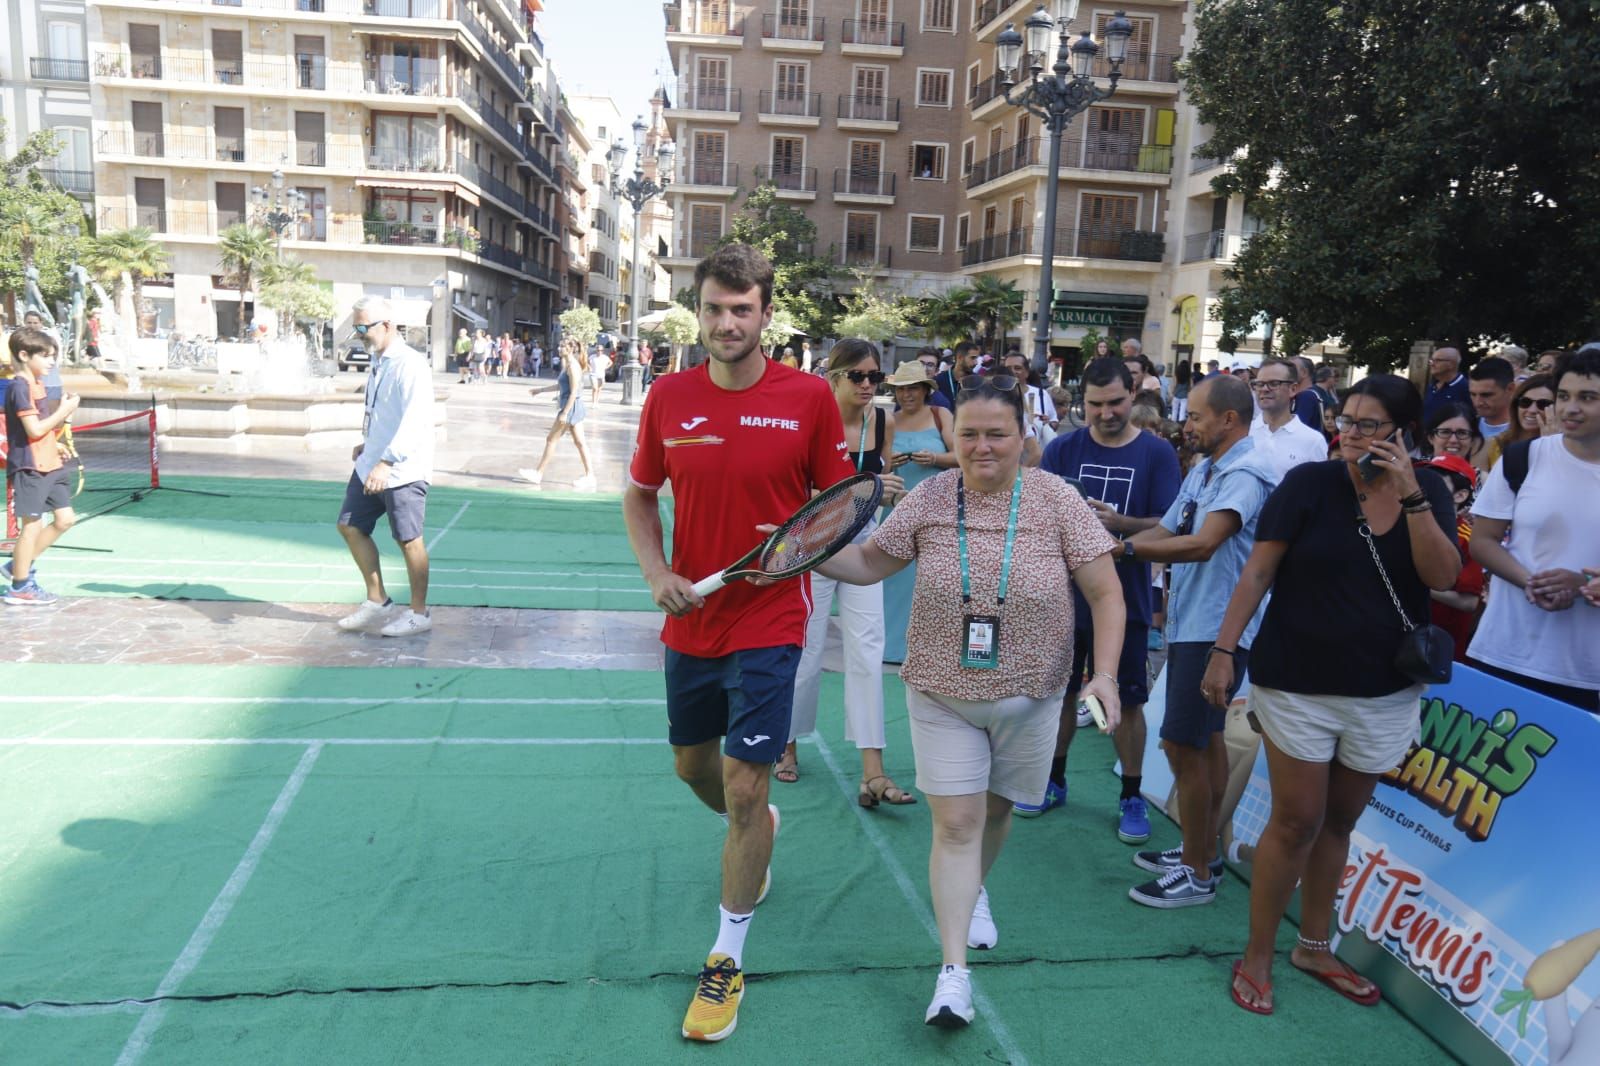 La Copa Davis ya se respira en las calles de València